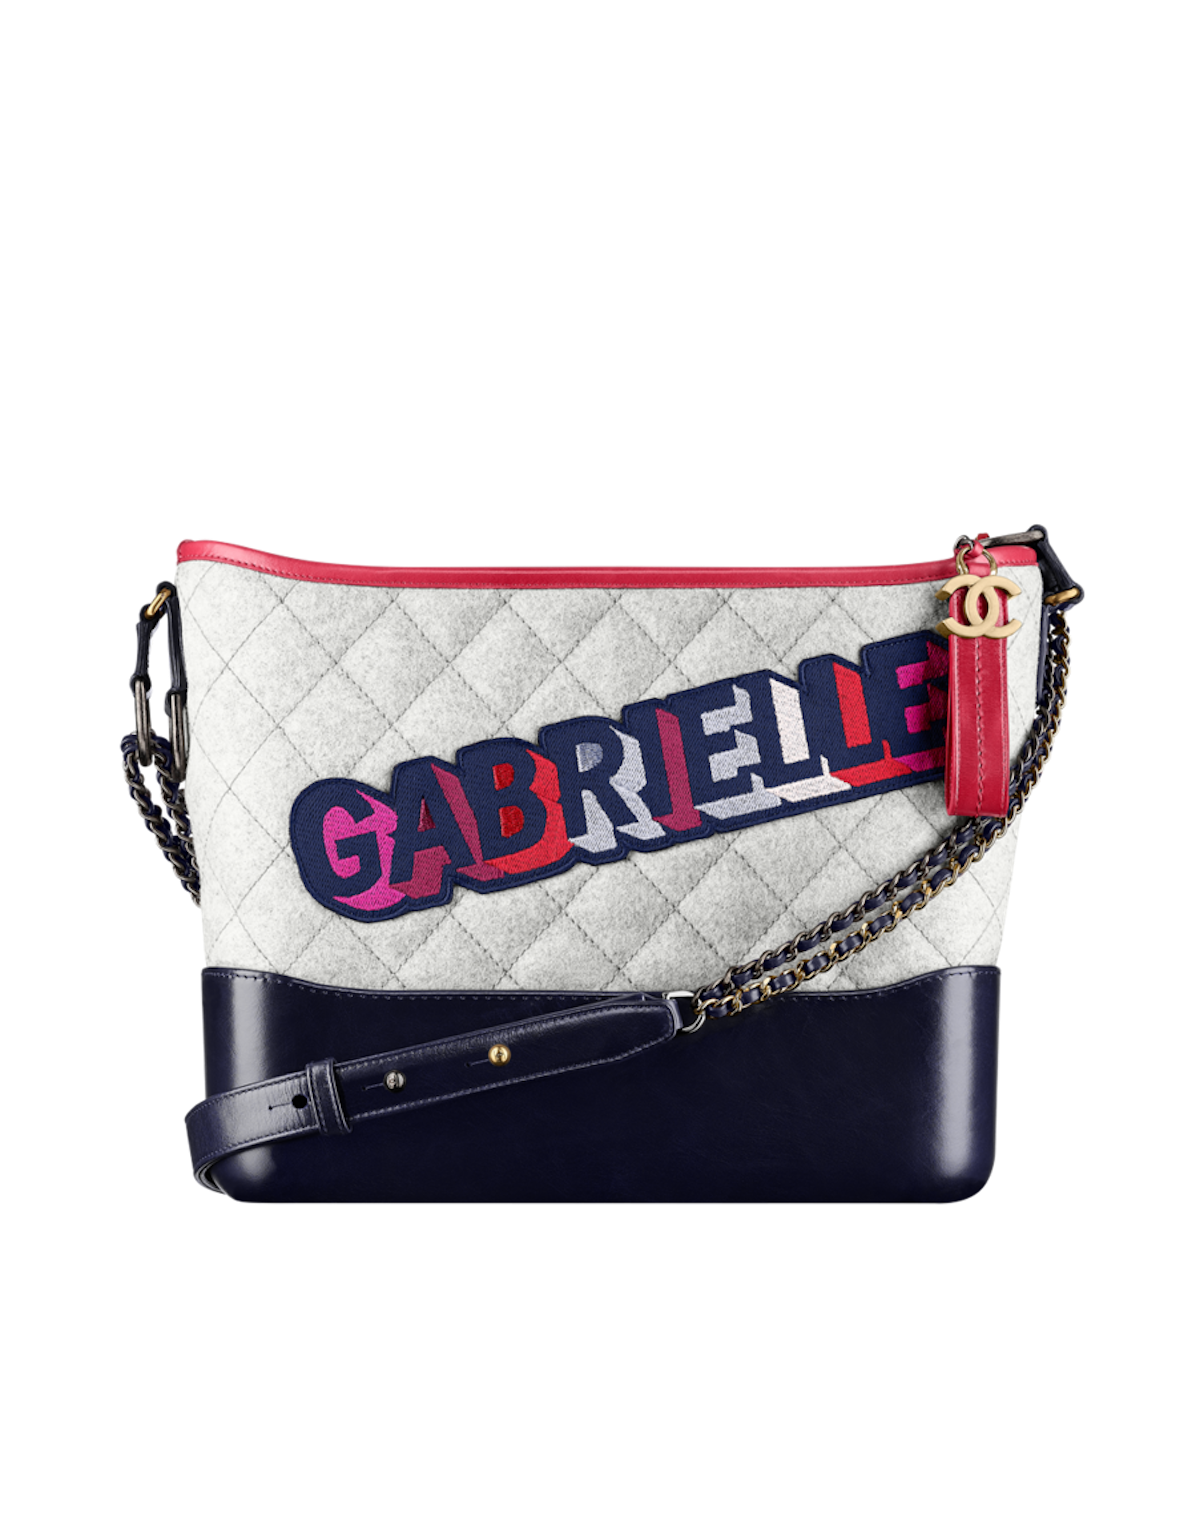 Chanel's Gabrielle Bag For Pre-Fall 2017